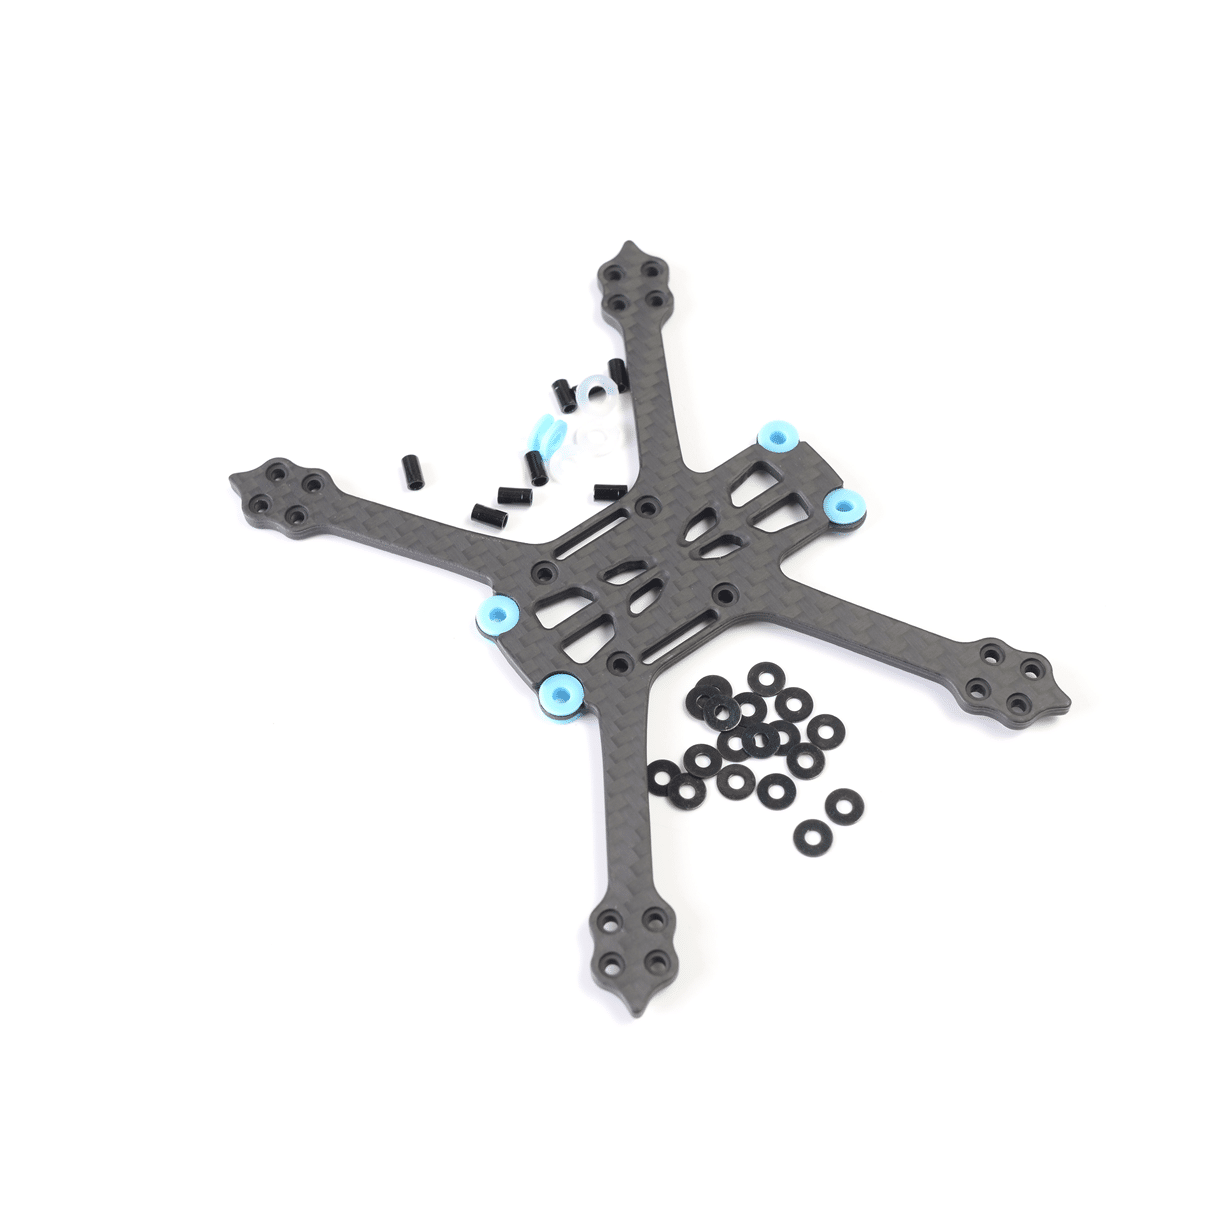 ImpulseRc Micro Apex 3" Frame Kit - DroneDynamics.ca